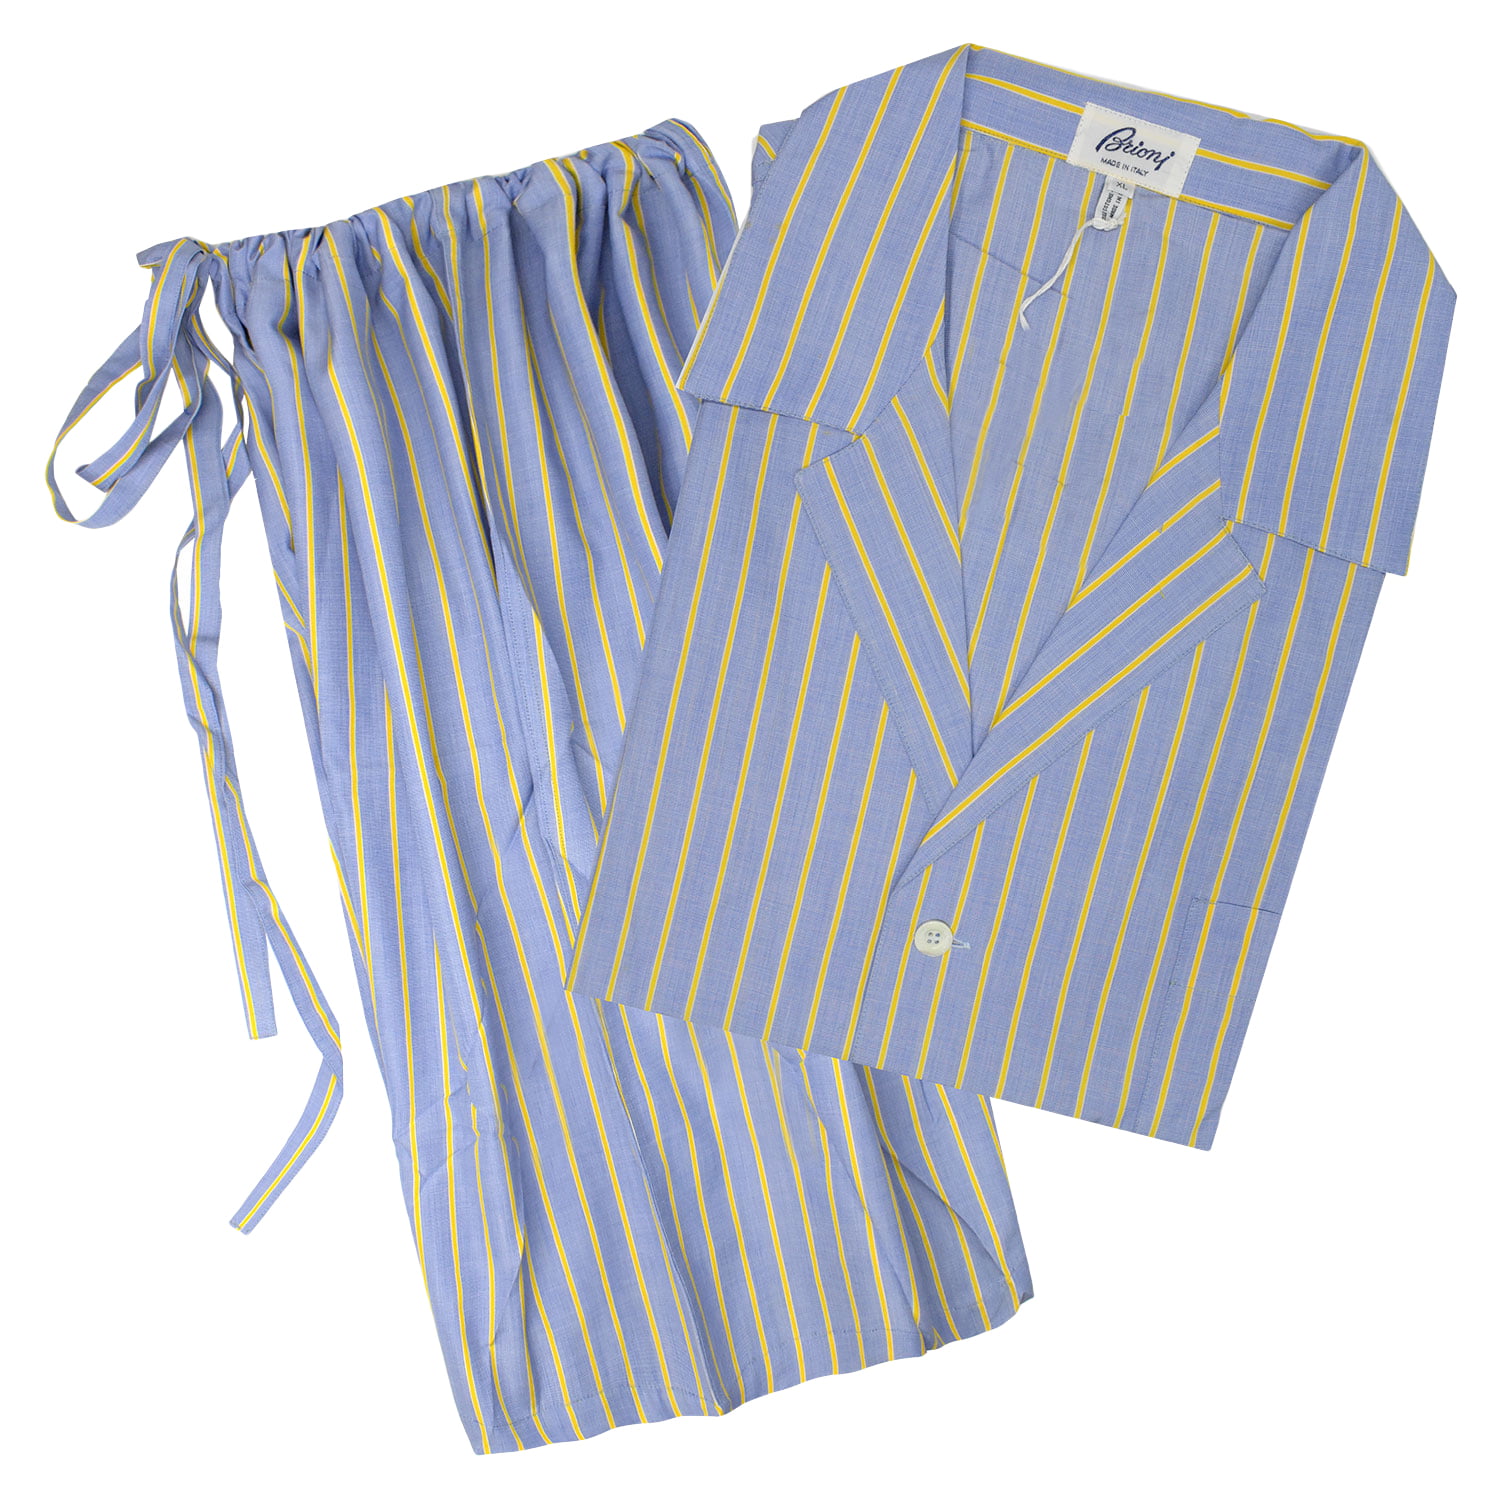 Brioni Men's Blue Yellow Striped Shorts Pajamas 